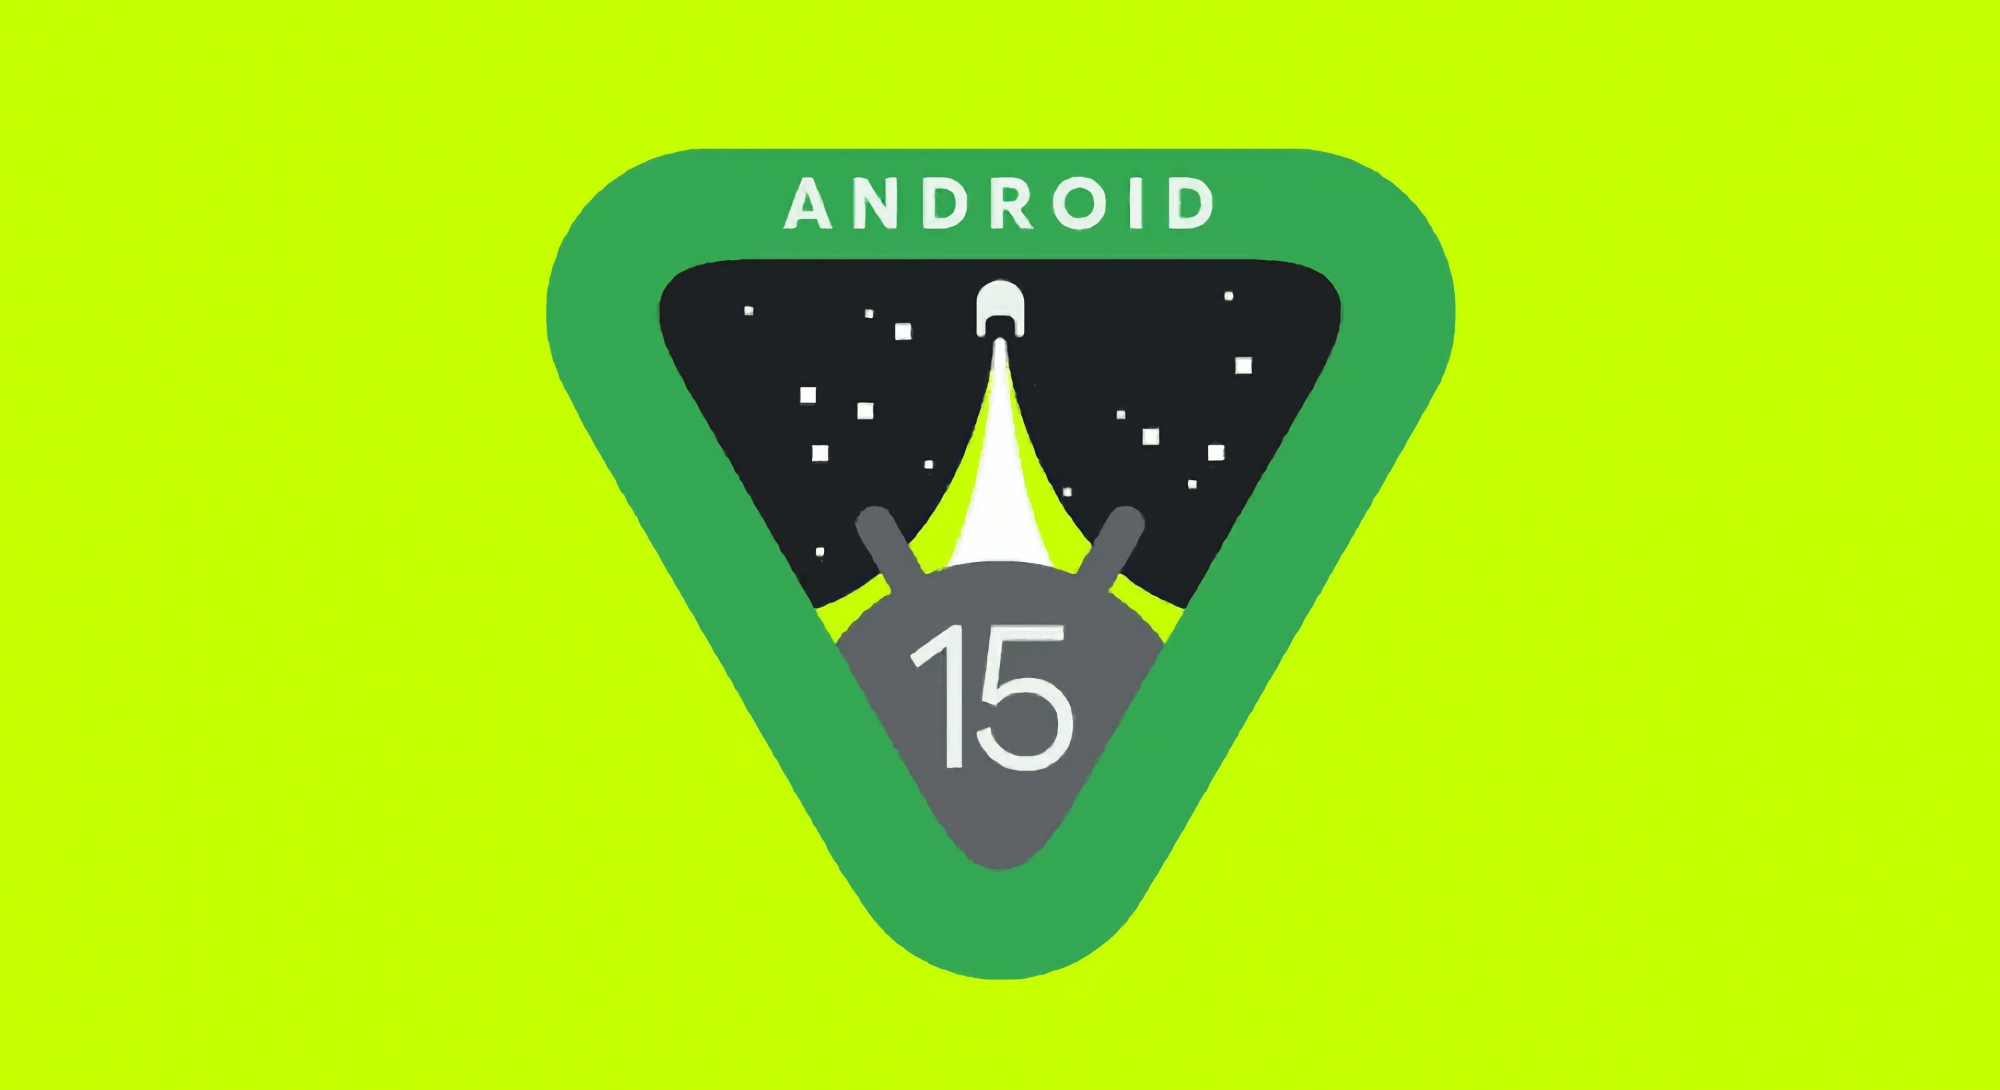 Co nowego w Android 15 Beta 4